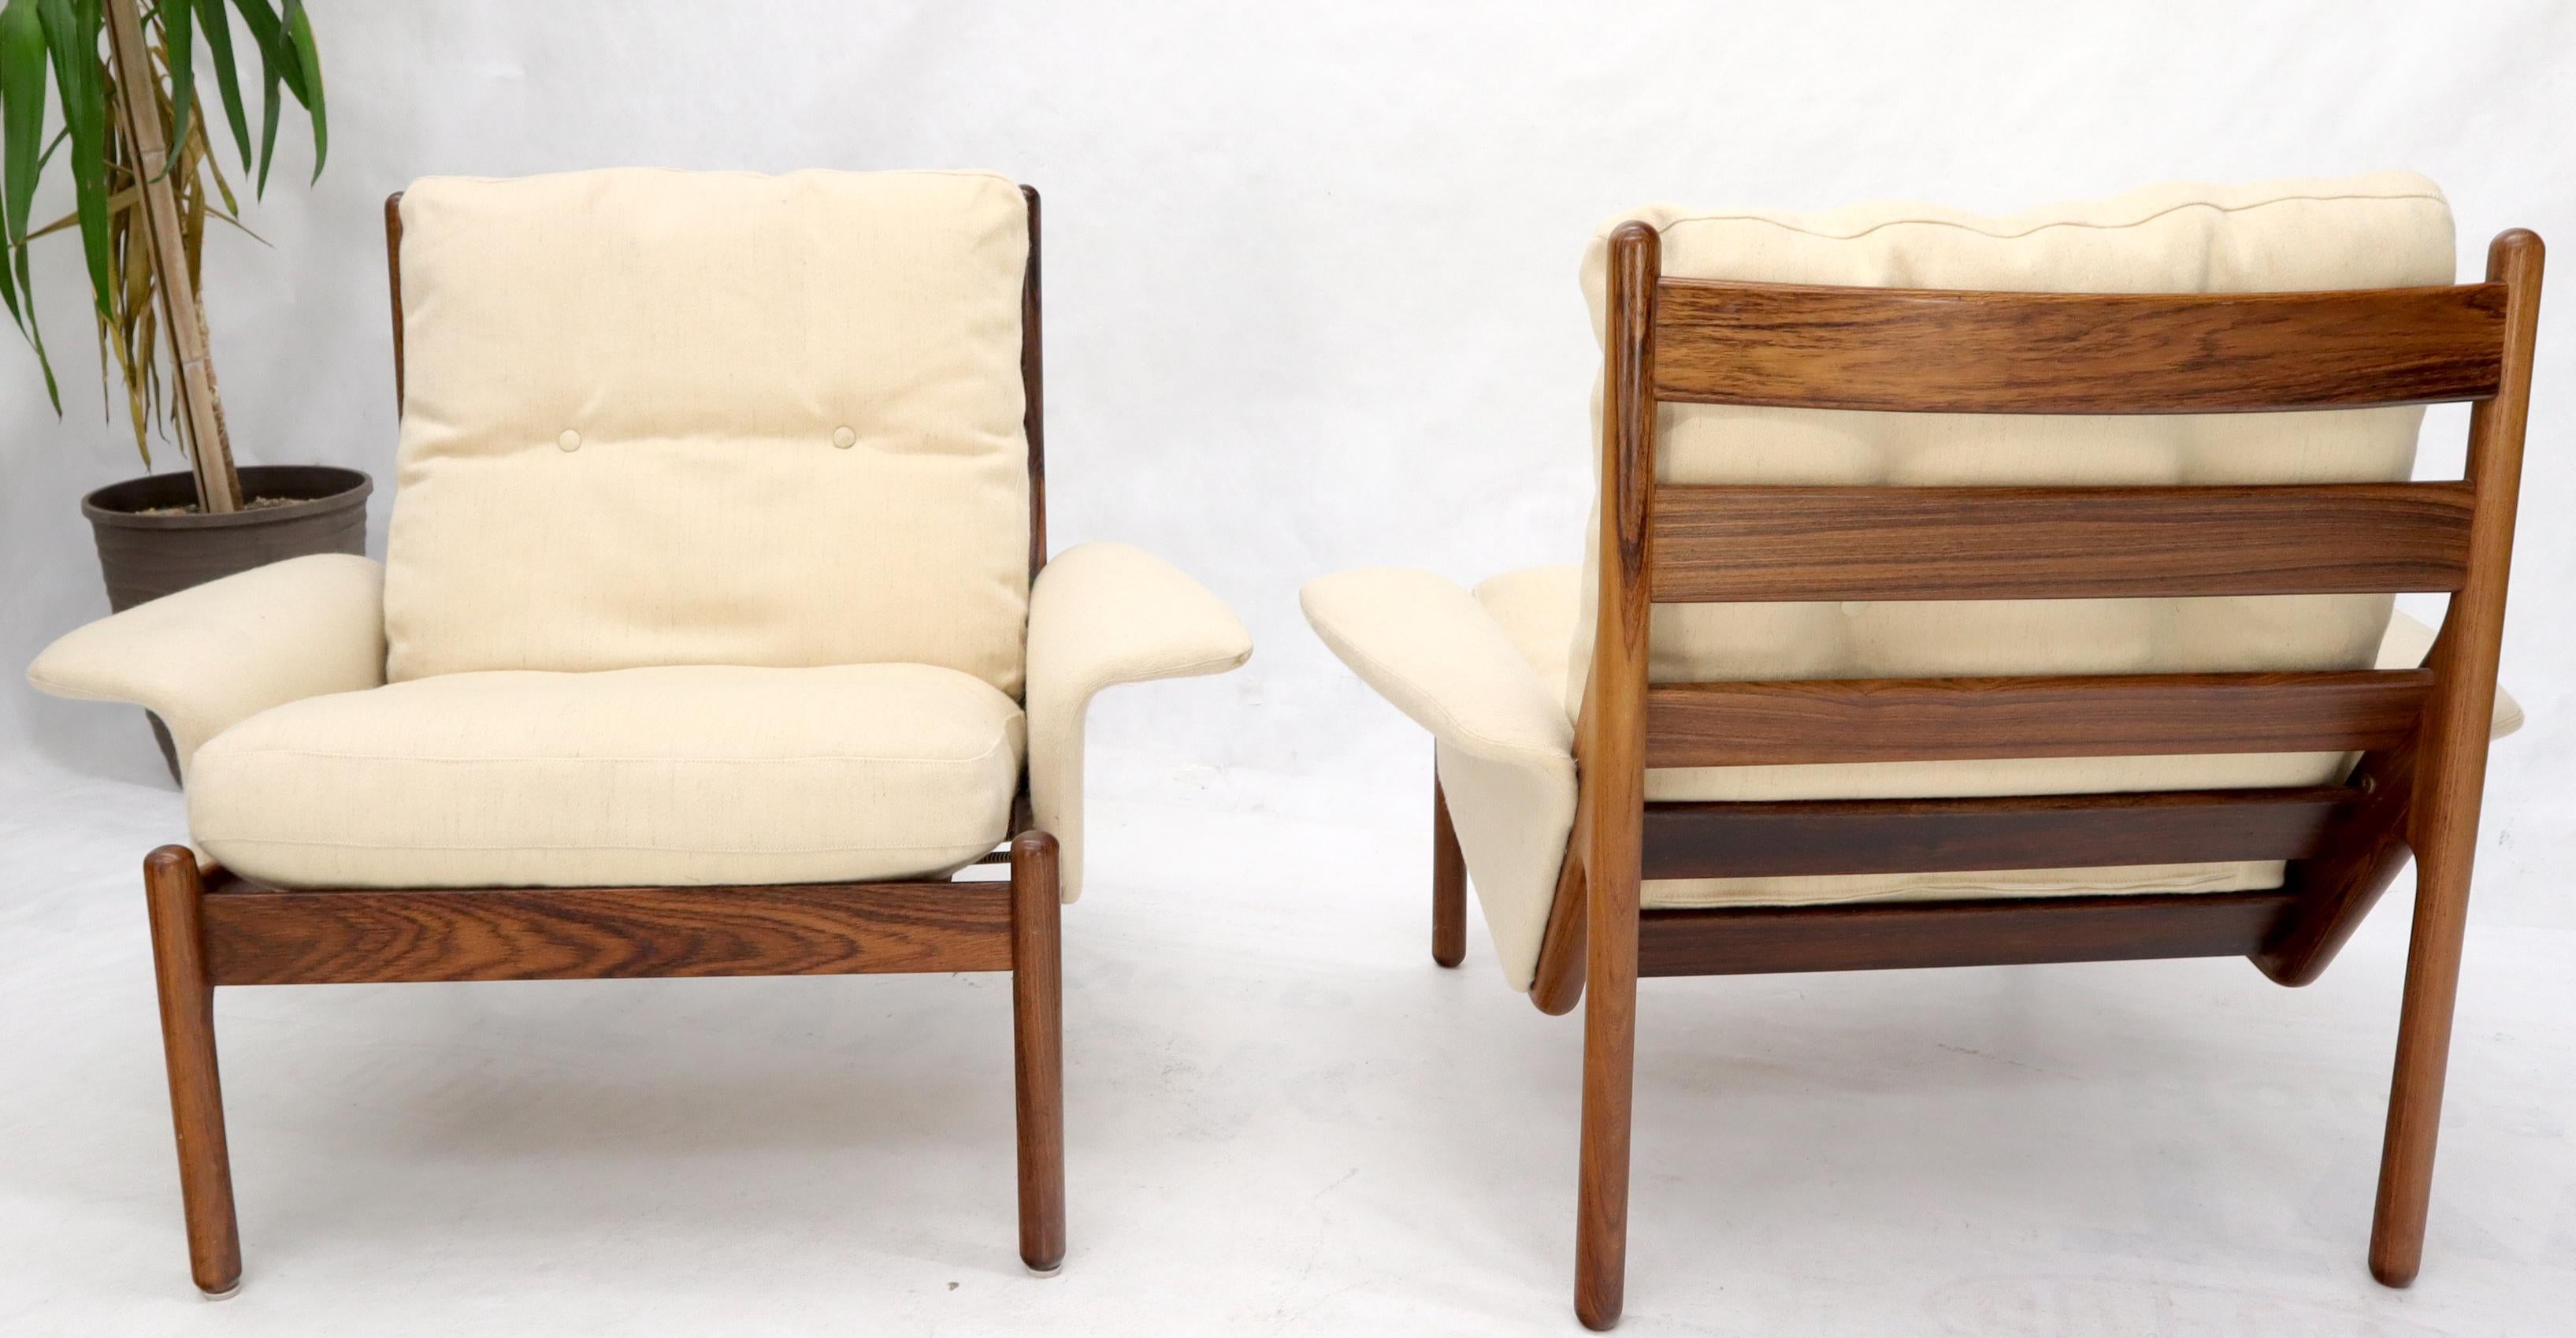 Pair of Danish Modern Virgin Wool Upholstery Rosewood Frames Longe Chairs  In Good Condition For Sale In Rockaway, NJ